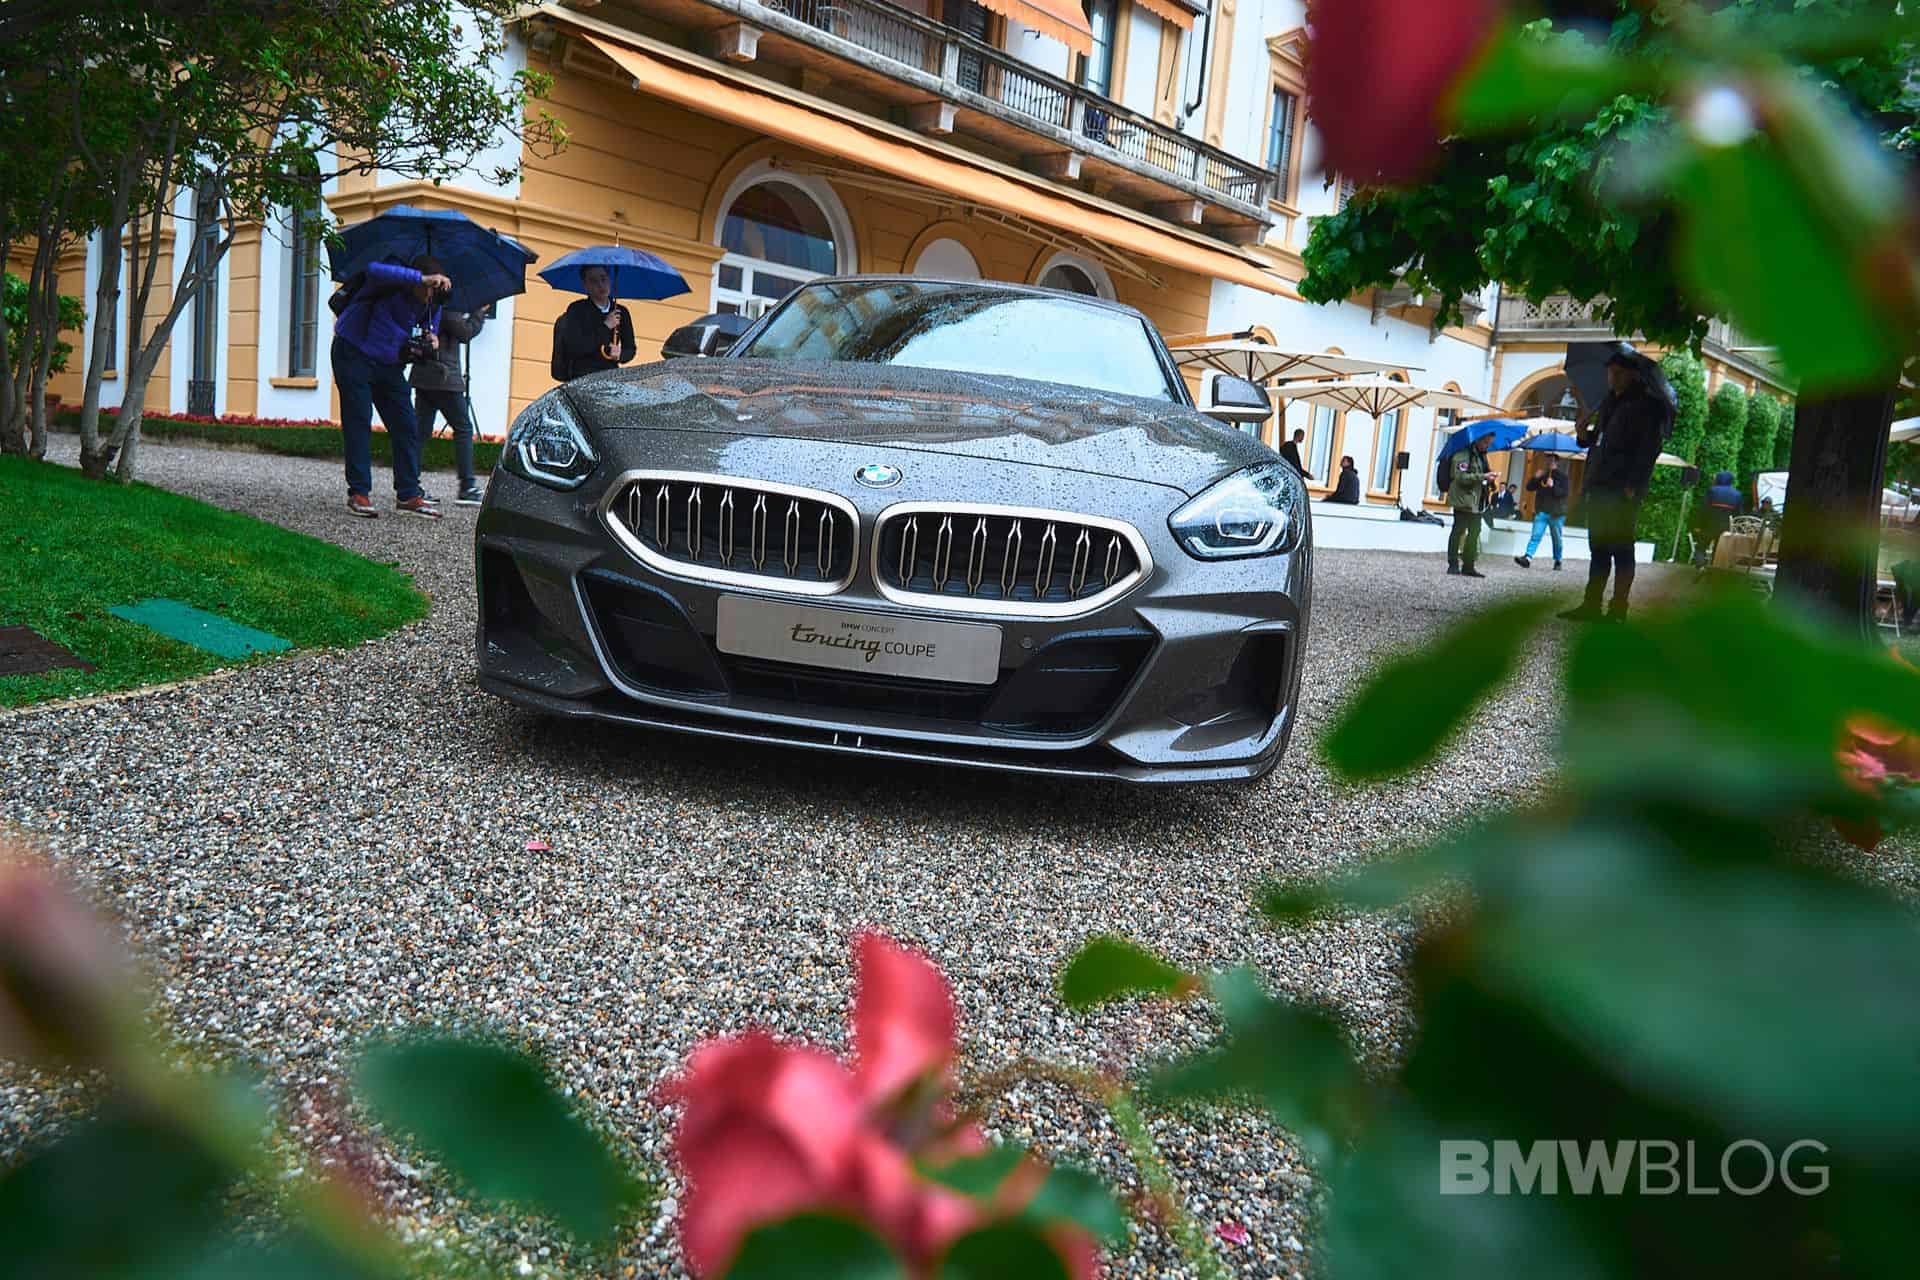 The striking BMW Touring Coupé Concept: showstopper on Lake Como